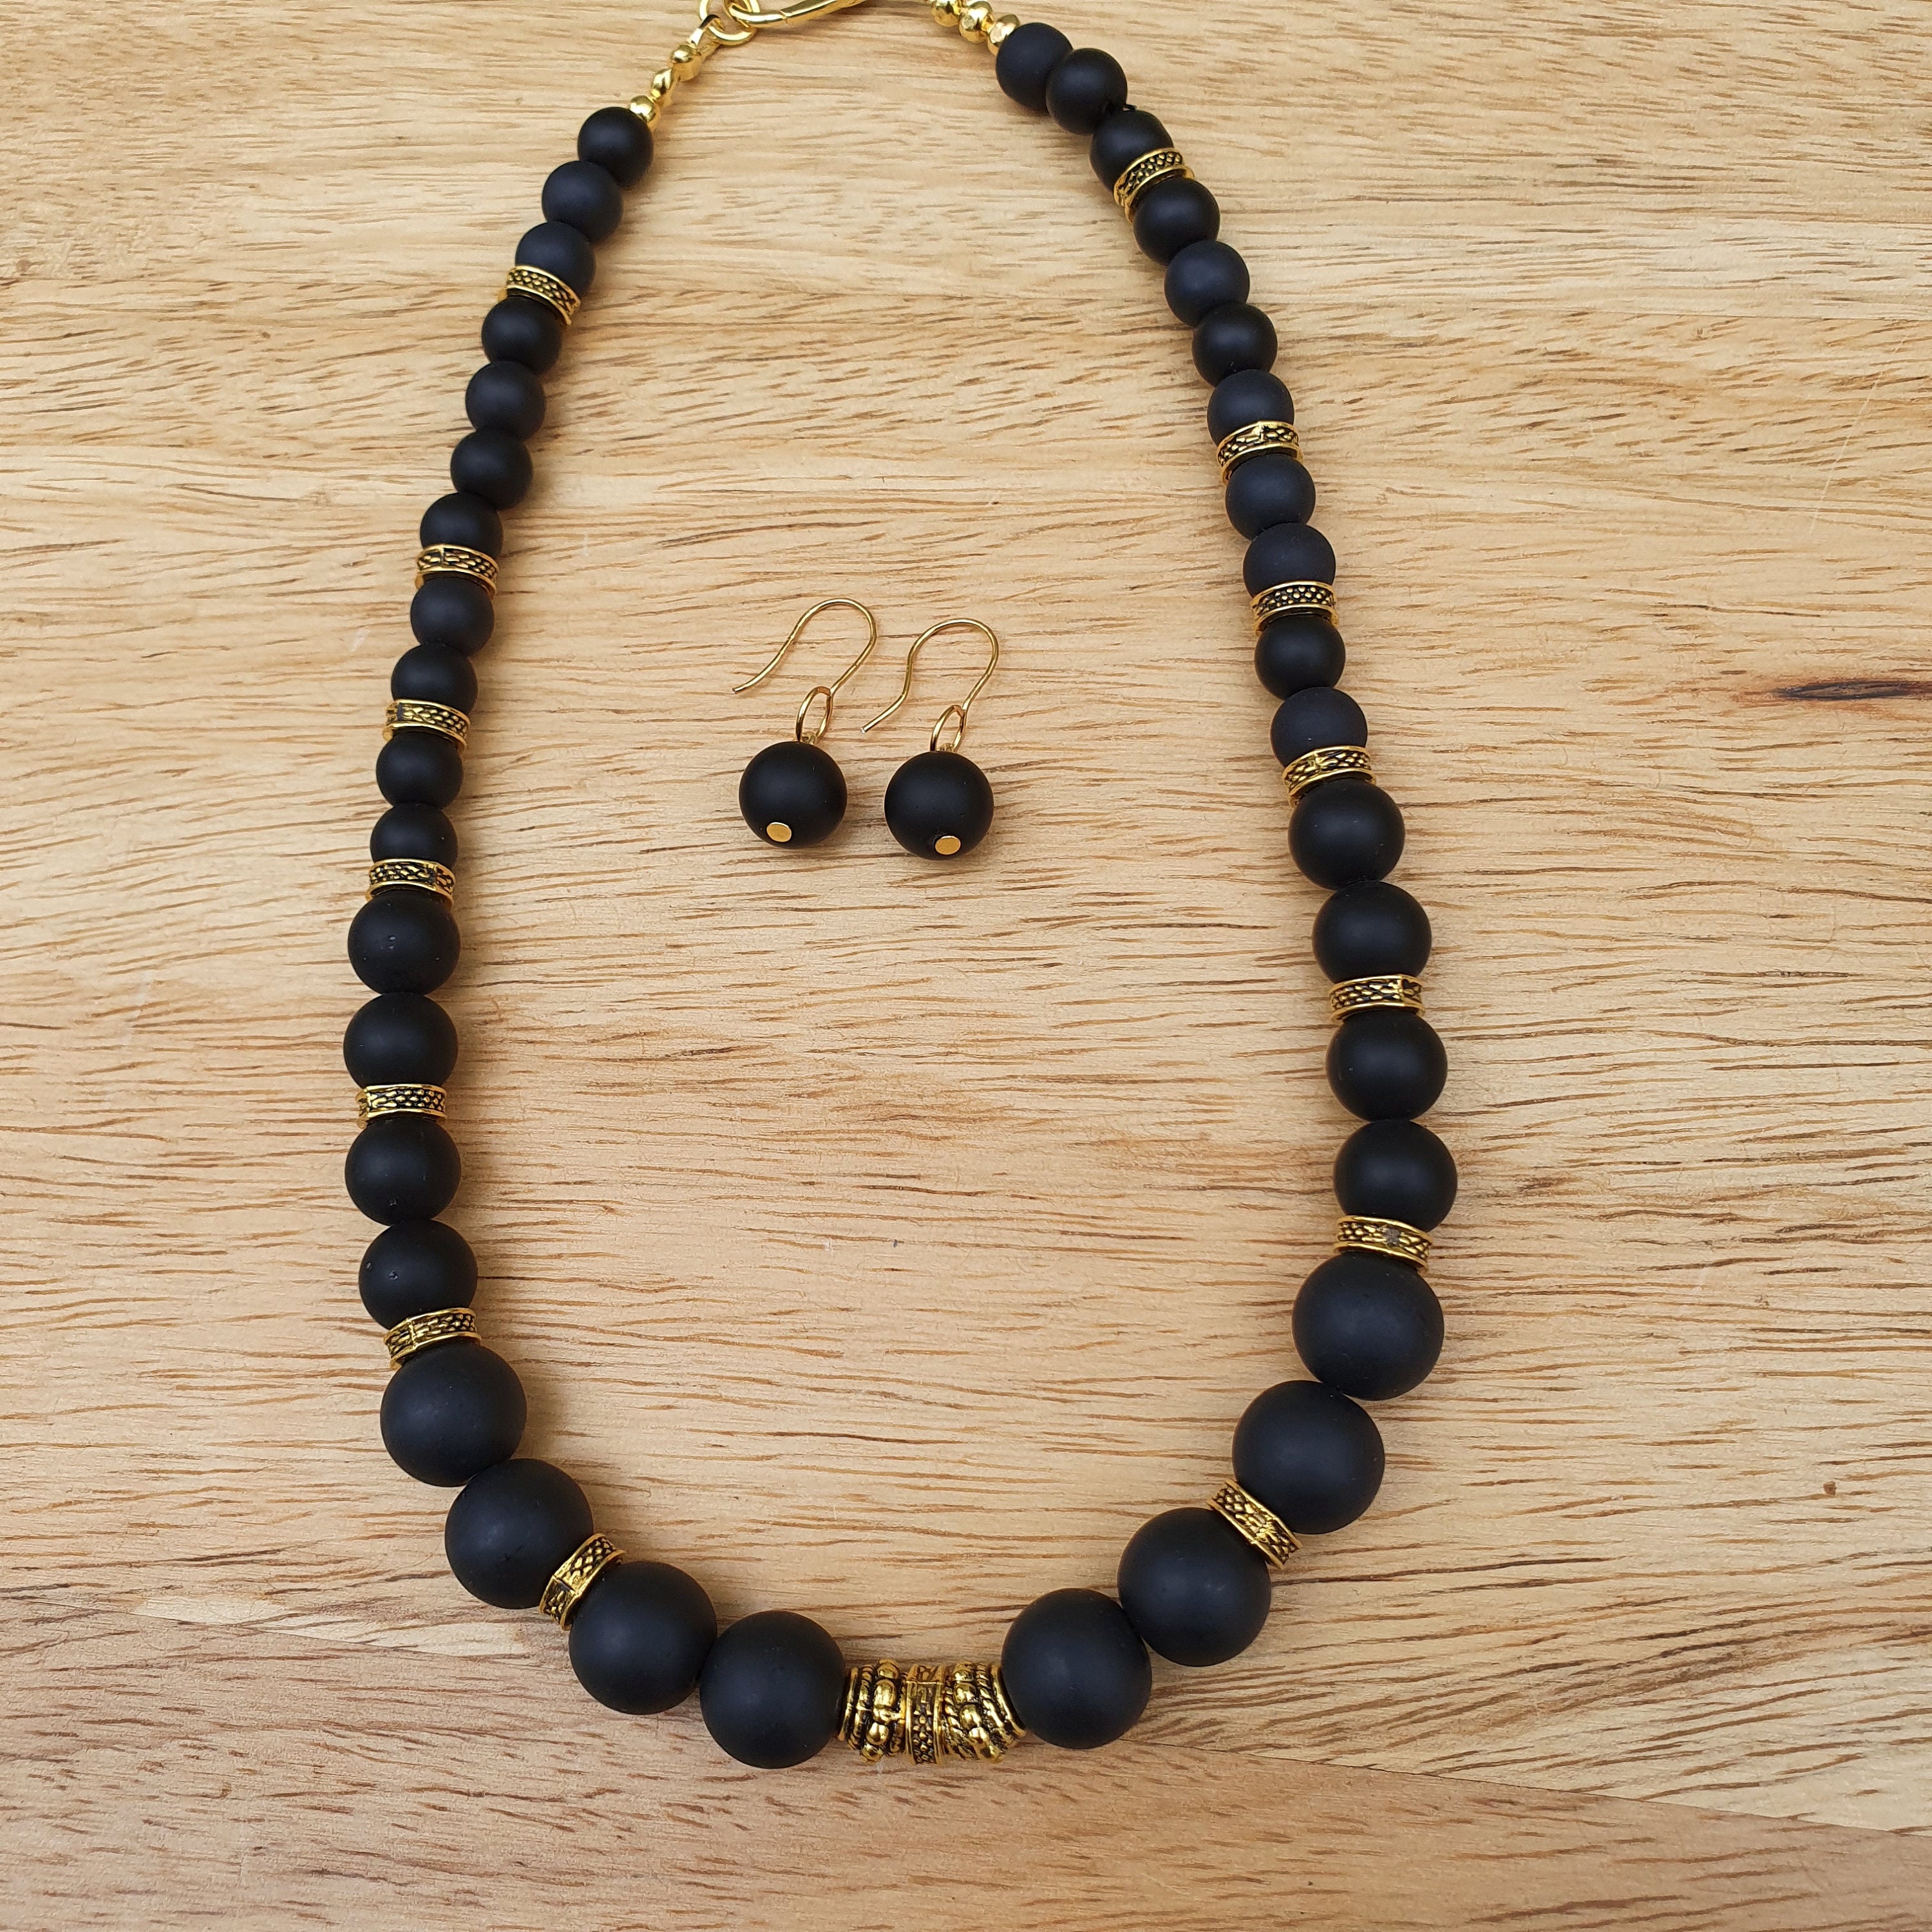 Black and Gold Beaded Necklace & Earrings Setlarge Black Bead - Etsy UK